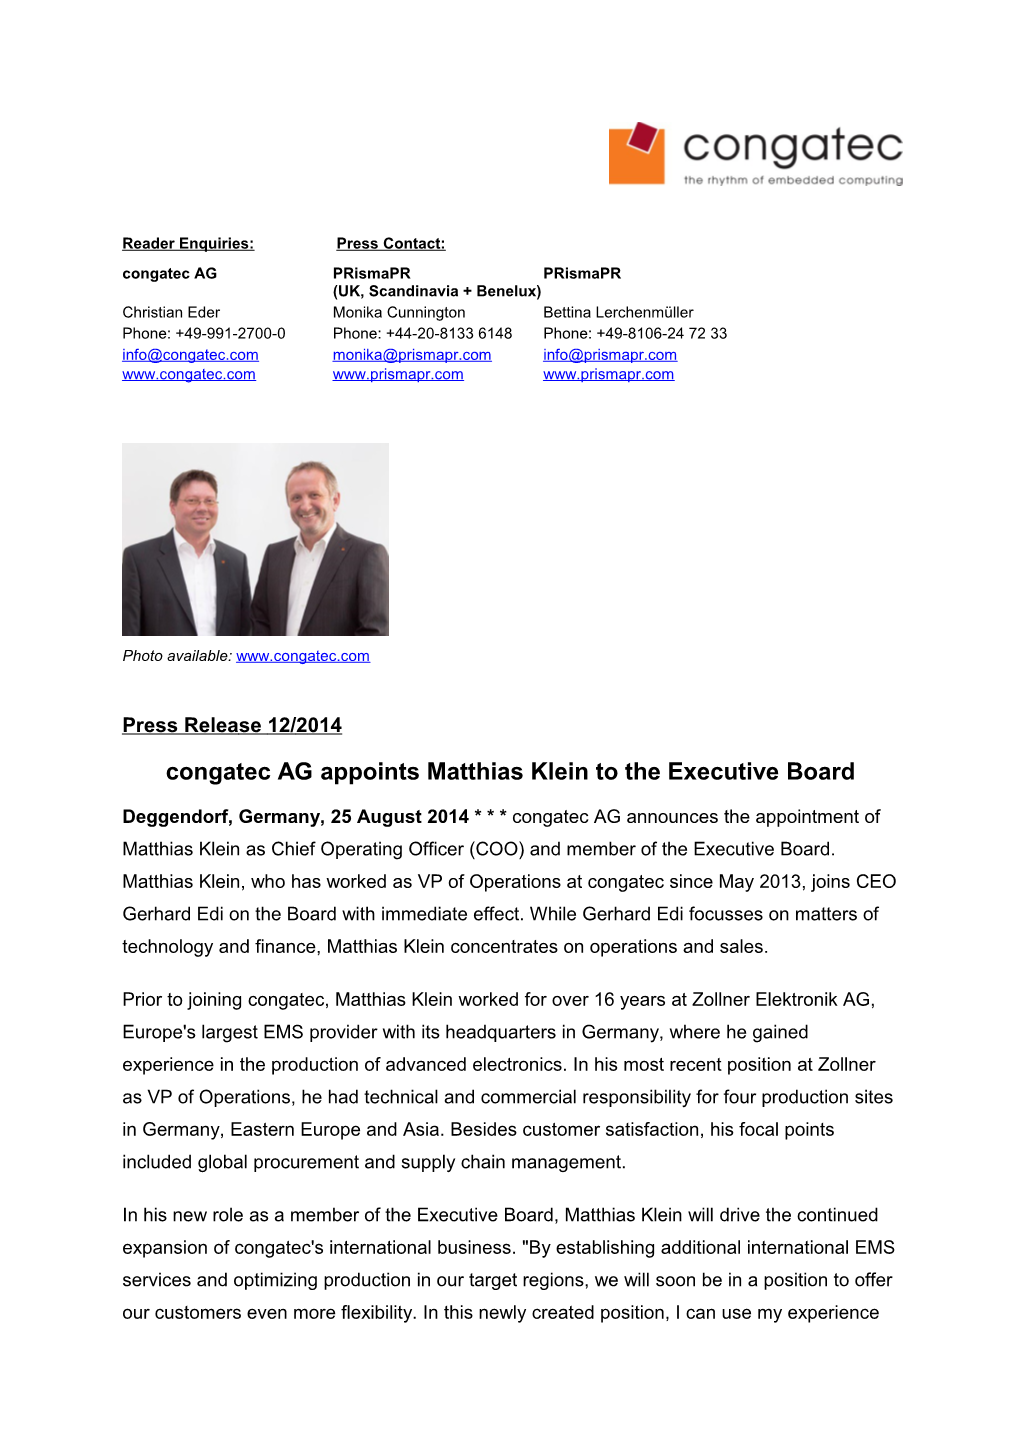 Congatec AG Appoints Matthias Klein to the Executive Board